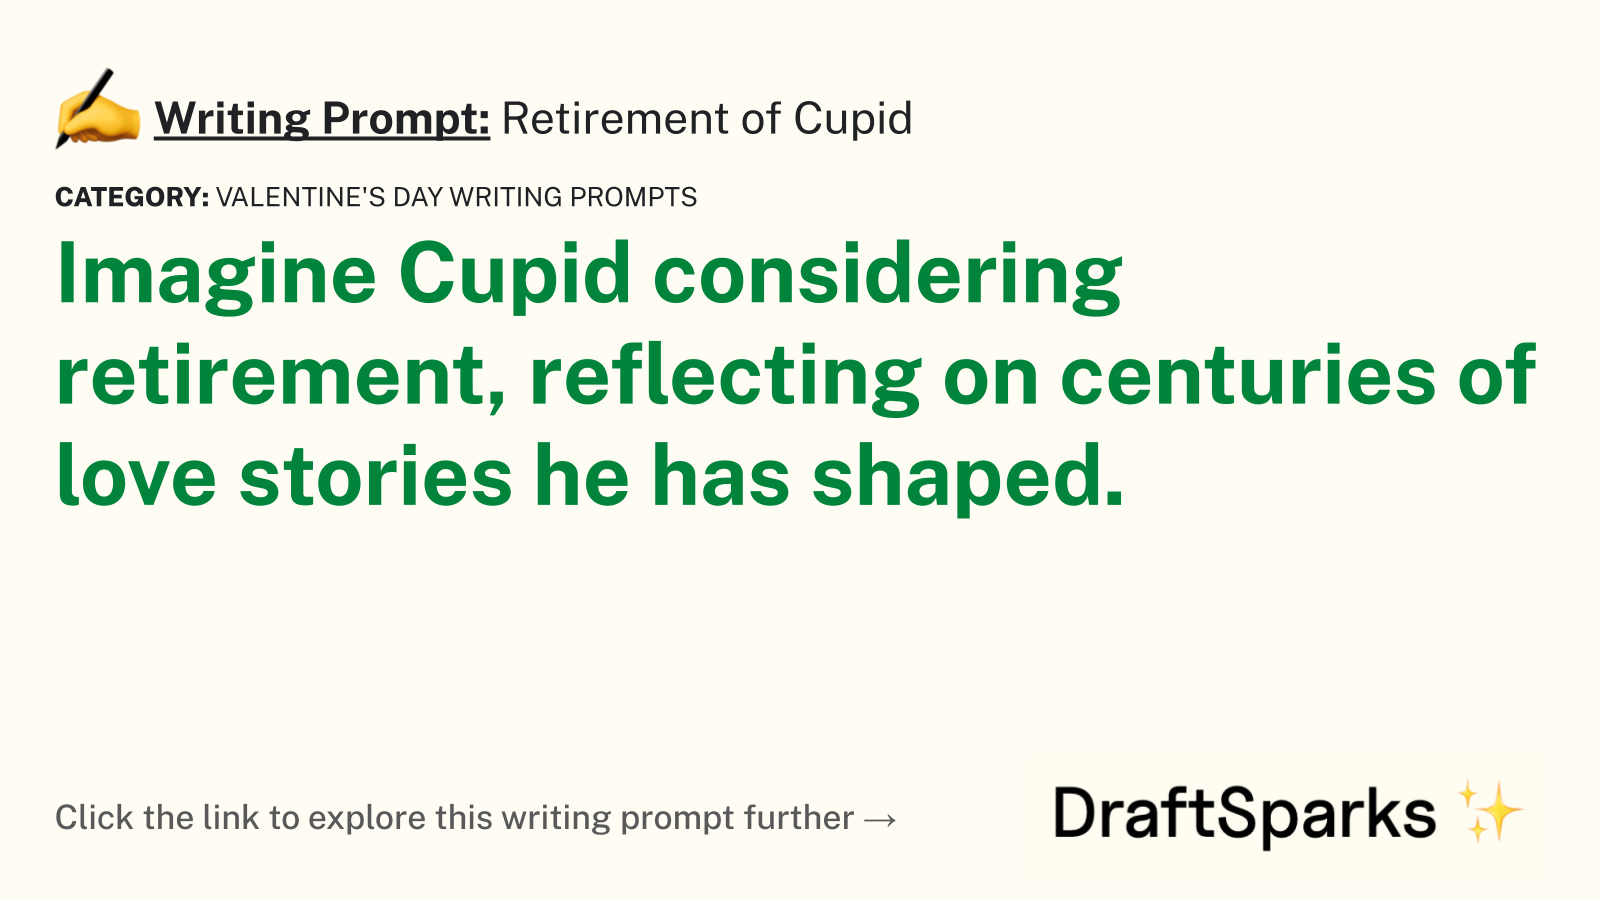 Retirement of Cupid